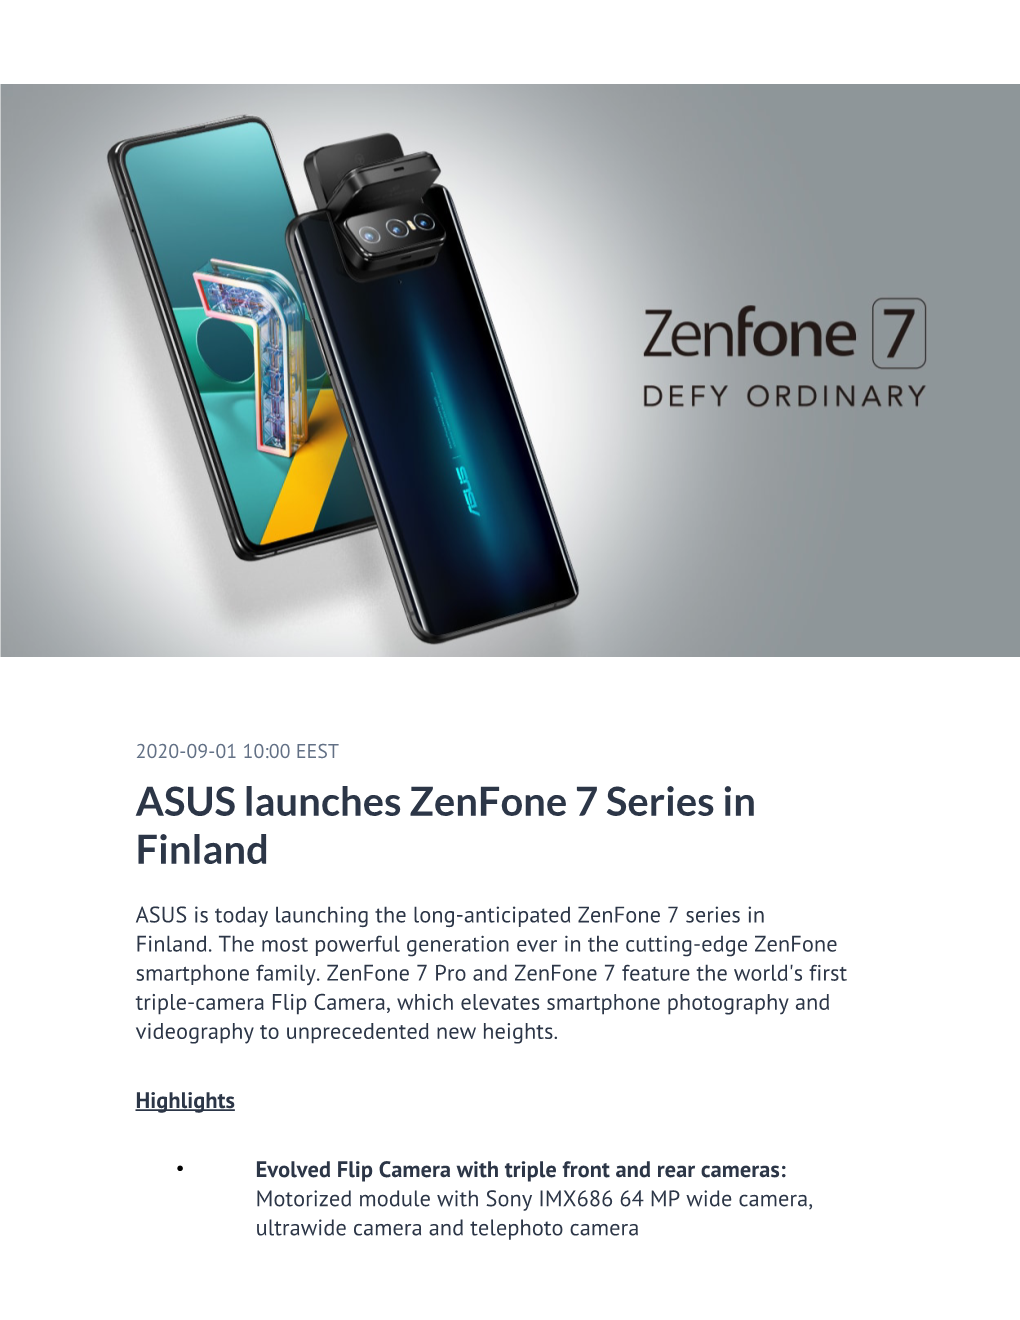 ASUS Launches Zenfone 7 Series in Finland